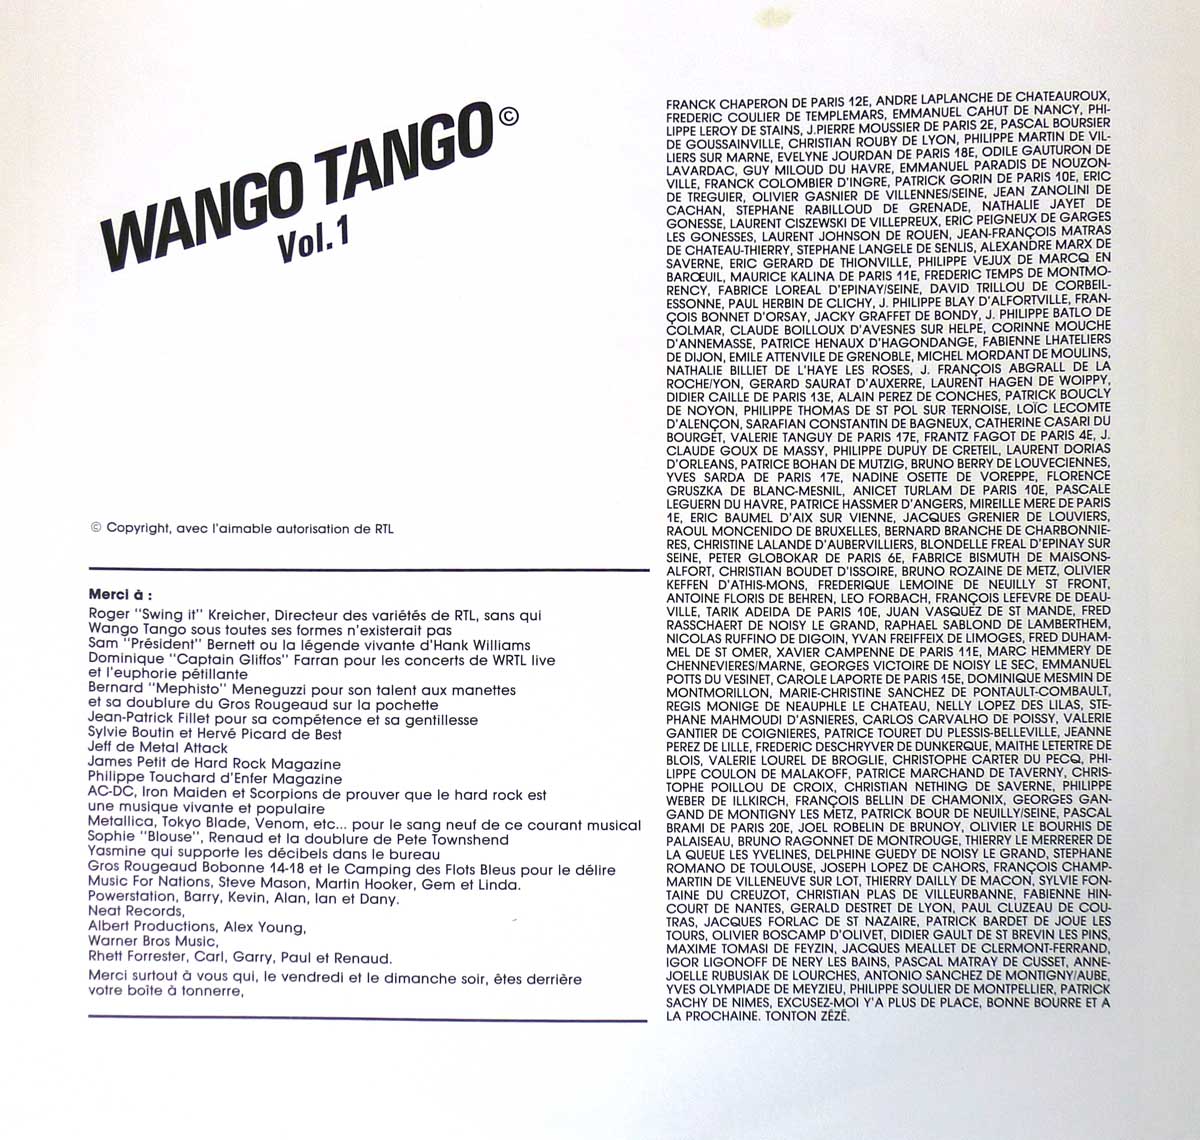 Inner Sleeve   of "Wango Tango Vol 1." Album